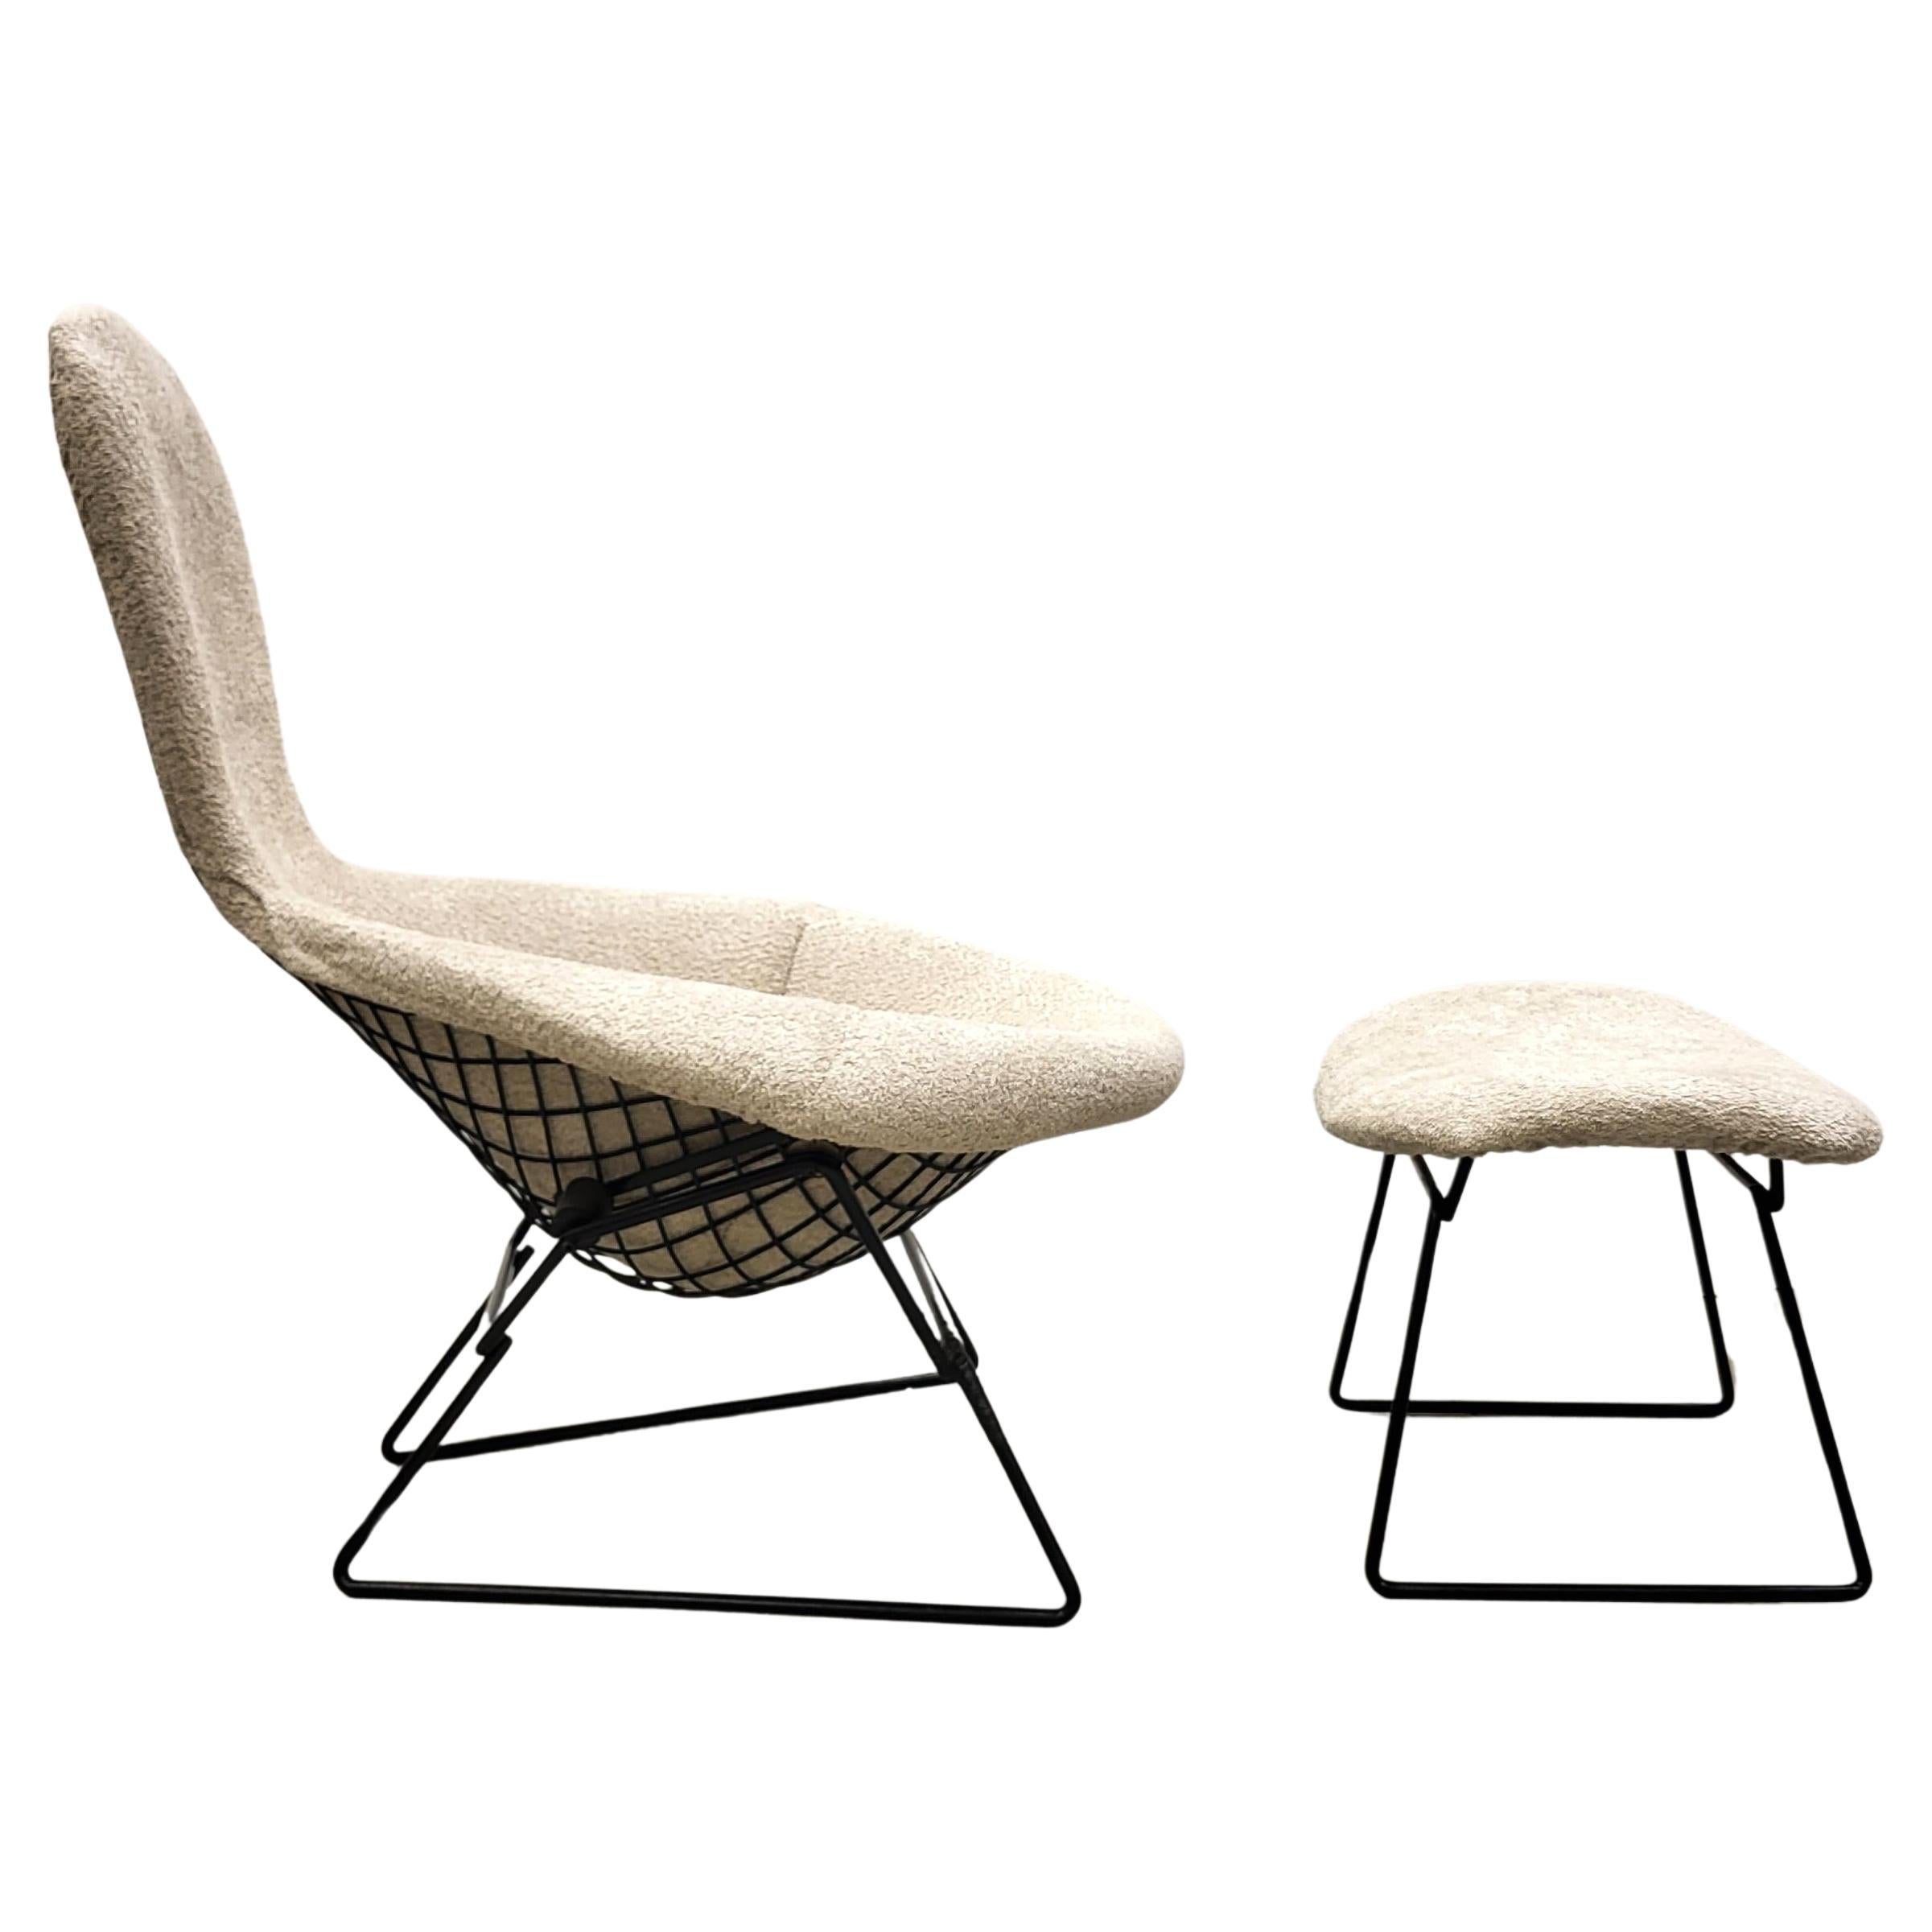 Early Bird Chair & Ottoman Bouclé von Harry Bertoia für Knoll, 1970er Jahre